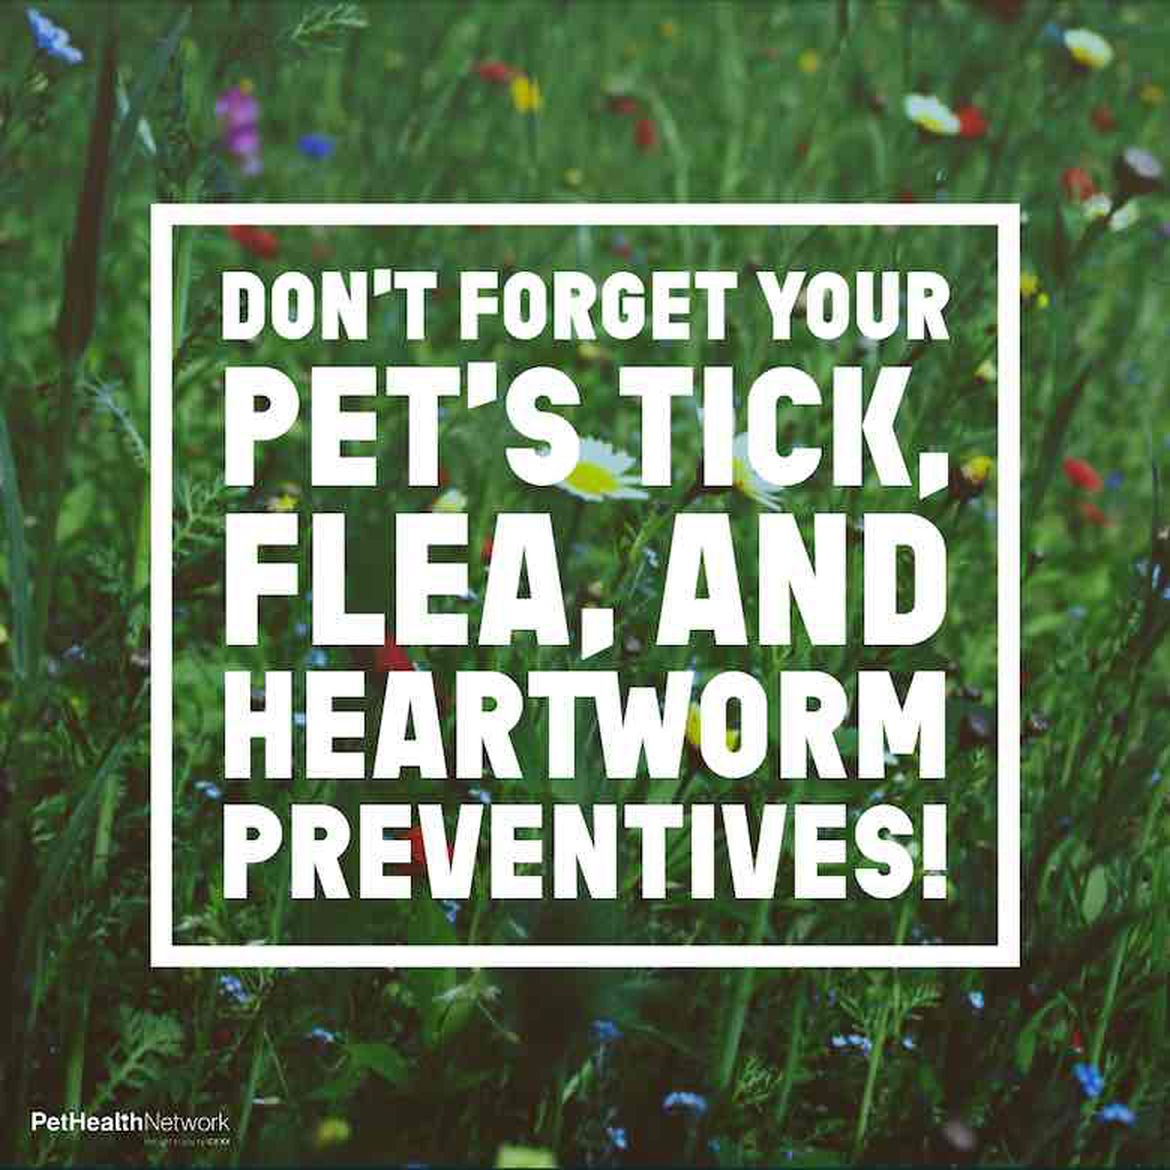 Social media reminder for heartworm preventives on August 1st.